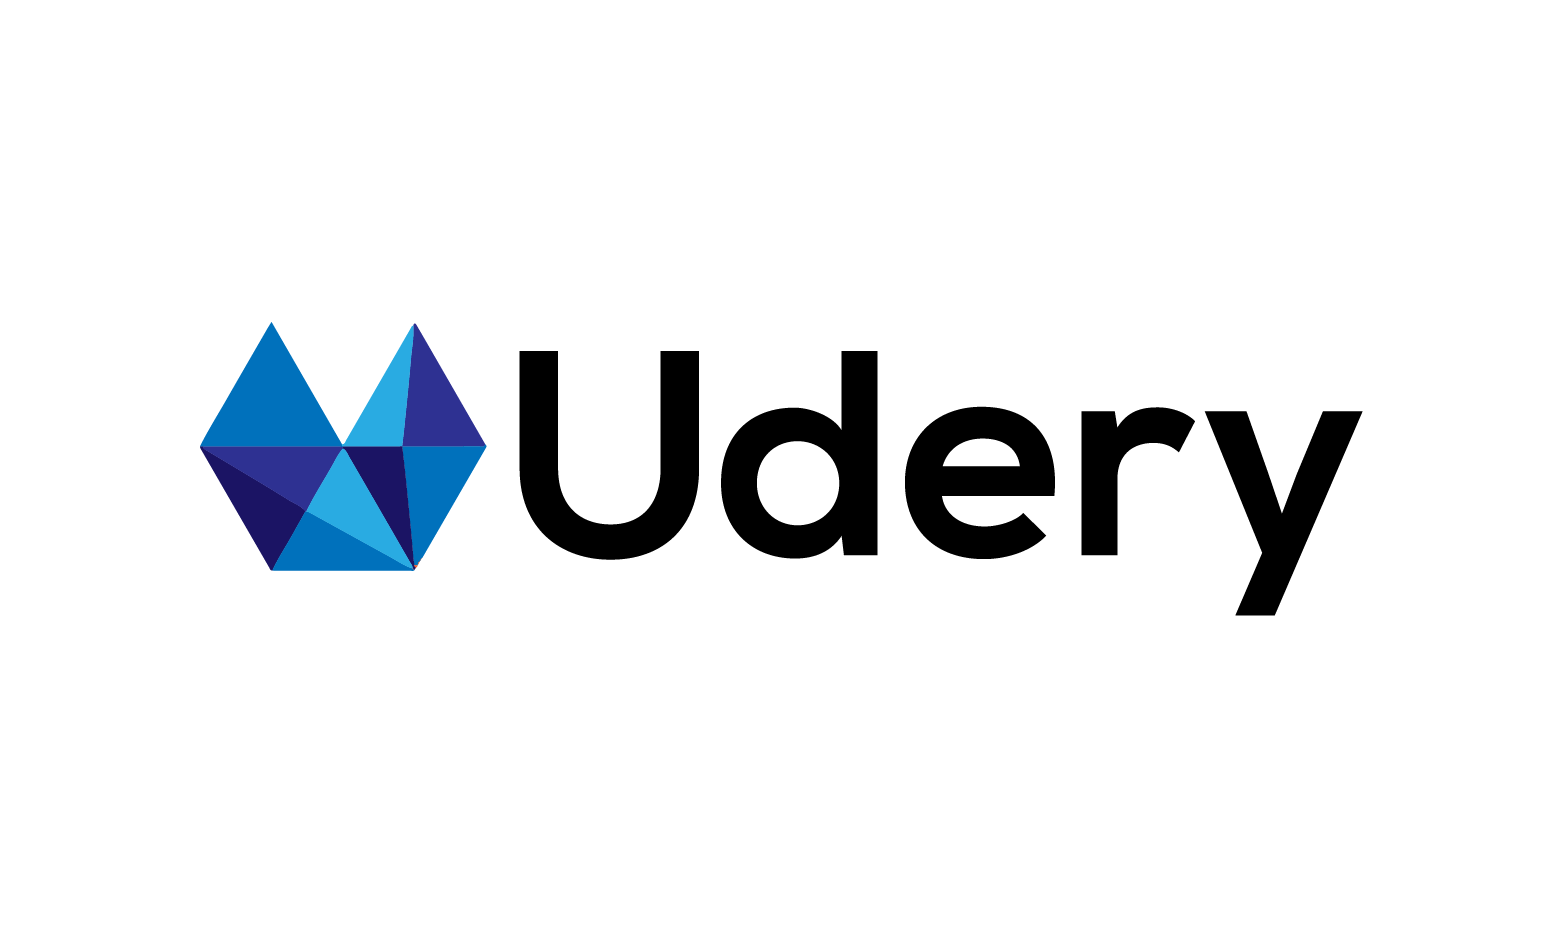 Udery.com - Creative brandable domain for sale